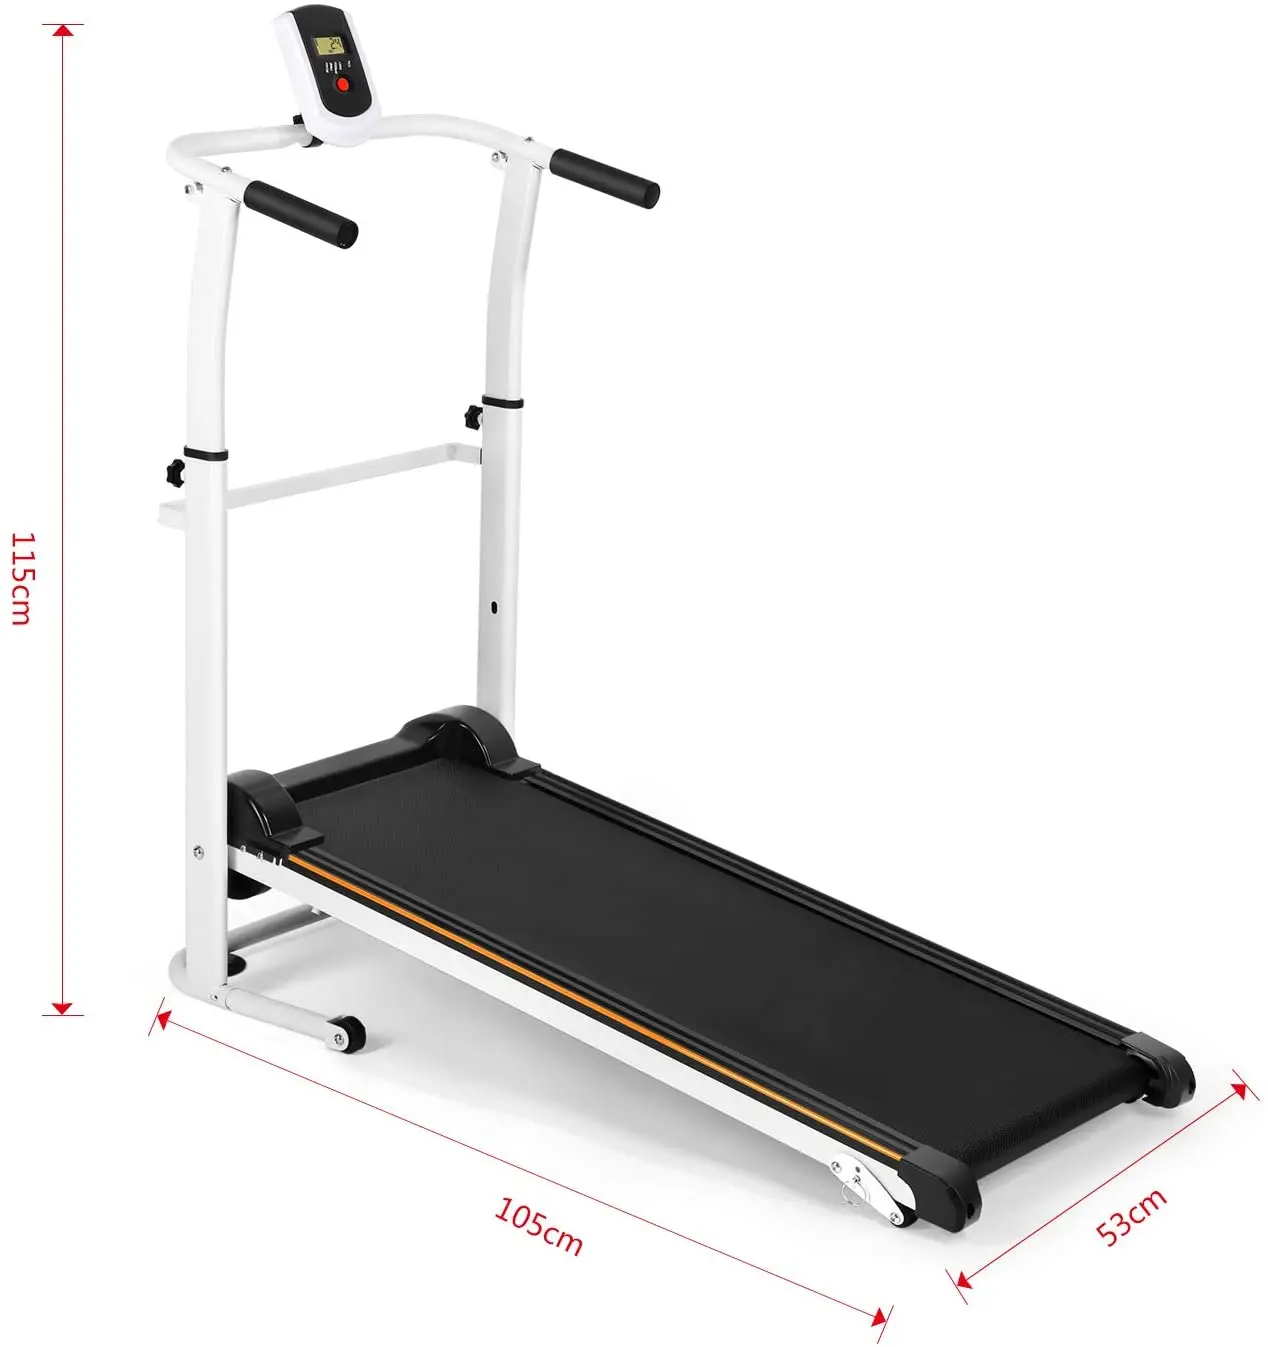 

Folding Treadmill Walking Machine Manual Cardio Fitness Exercise Cheap Treadmill Adjustable Height 150KG Capacity, Customized color